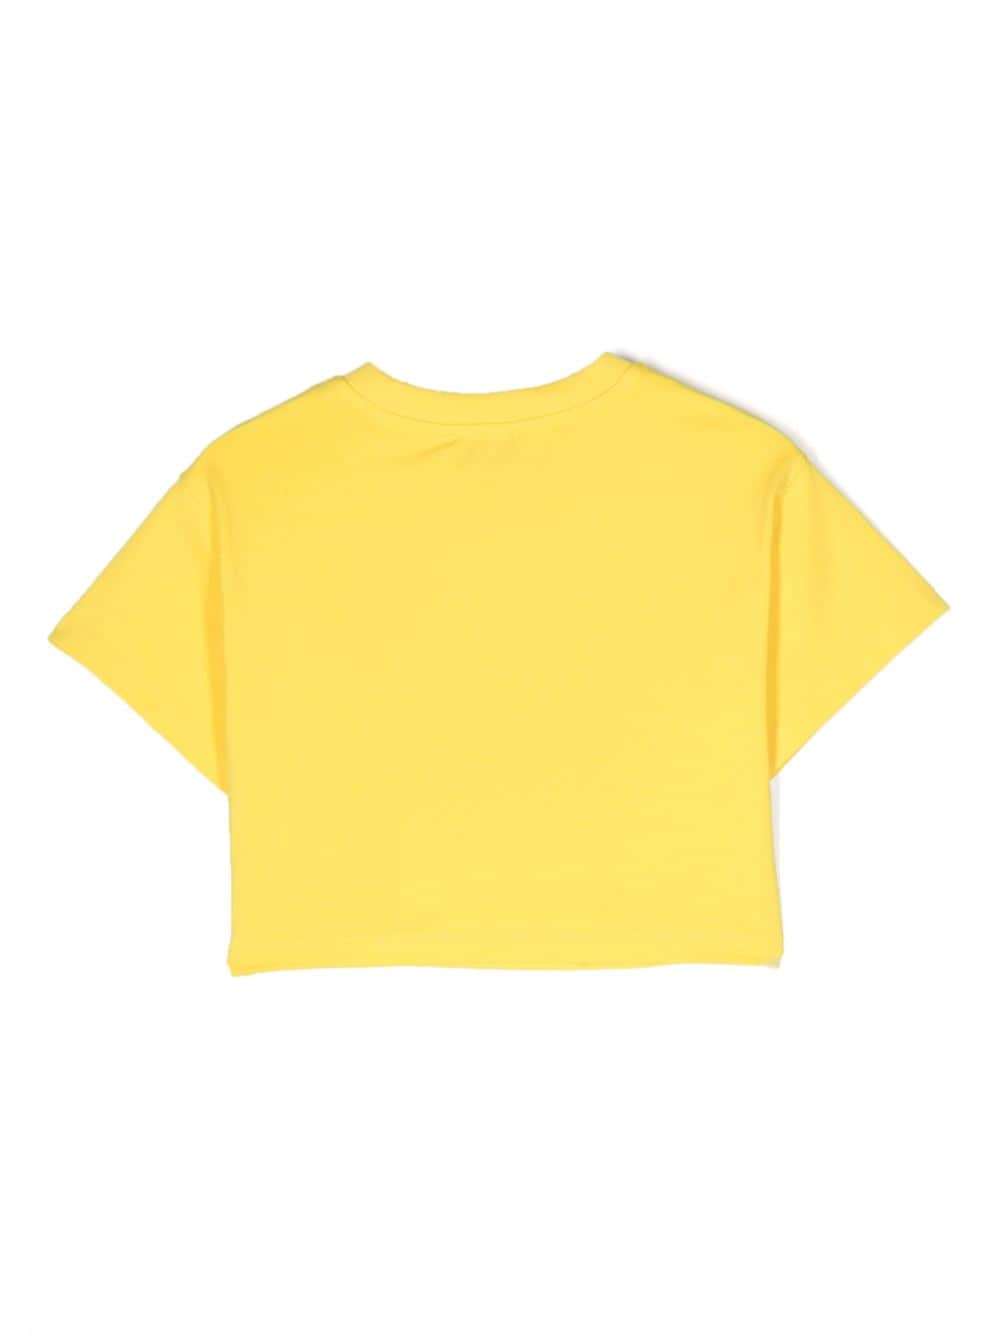 T-shirt fille jaune